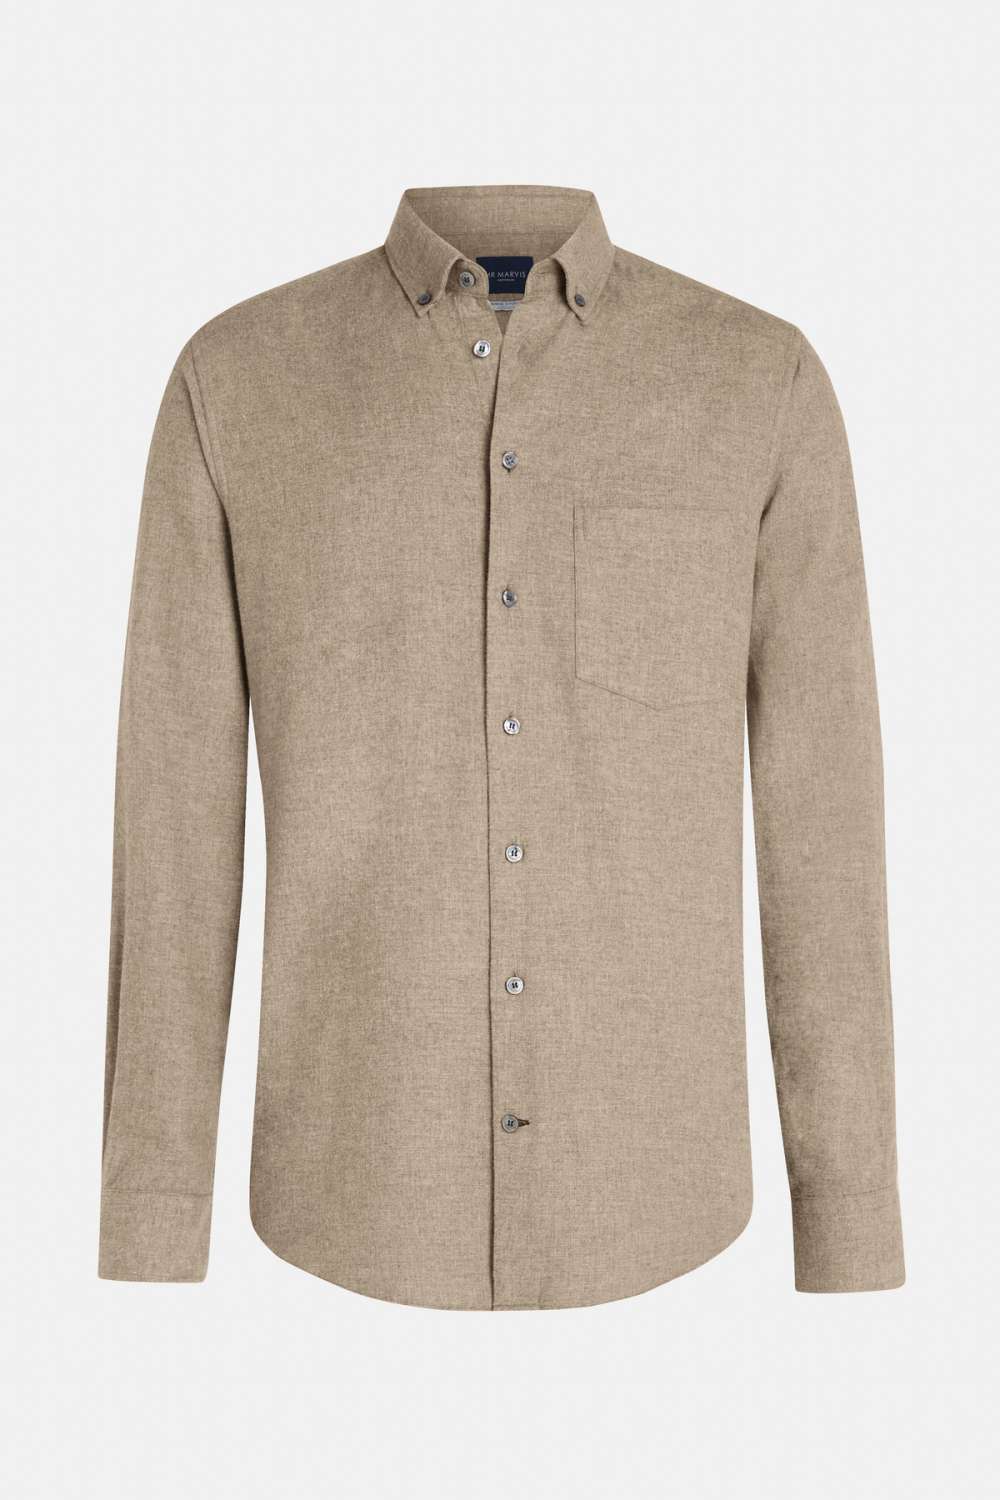 Baristas * The Flannel Shirt